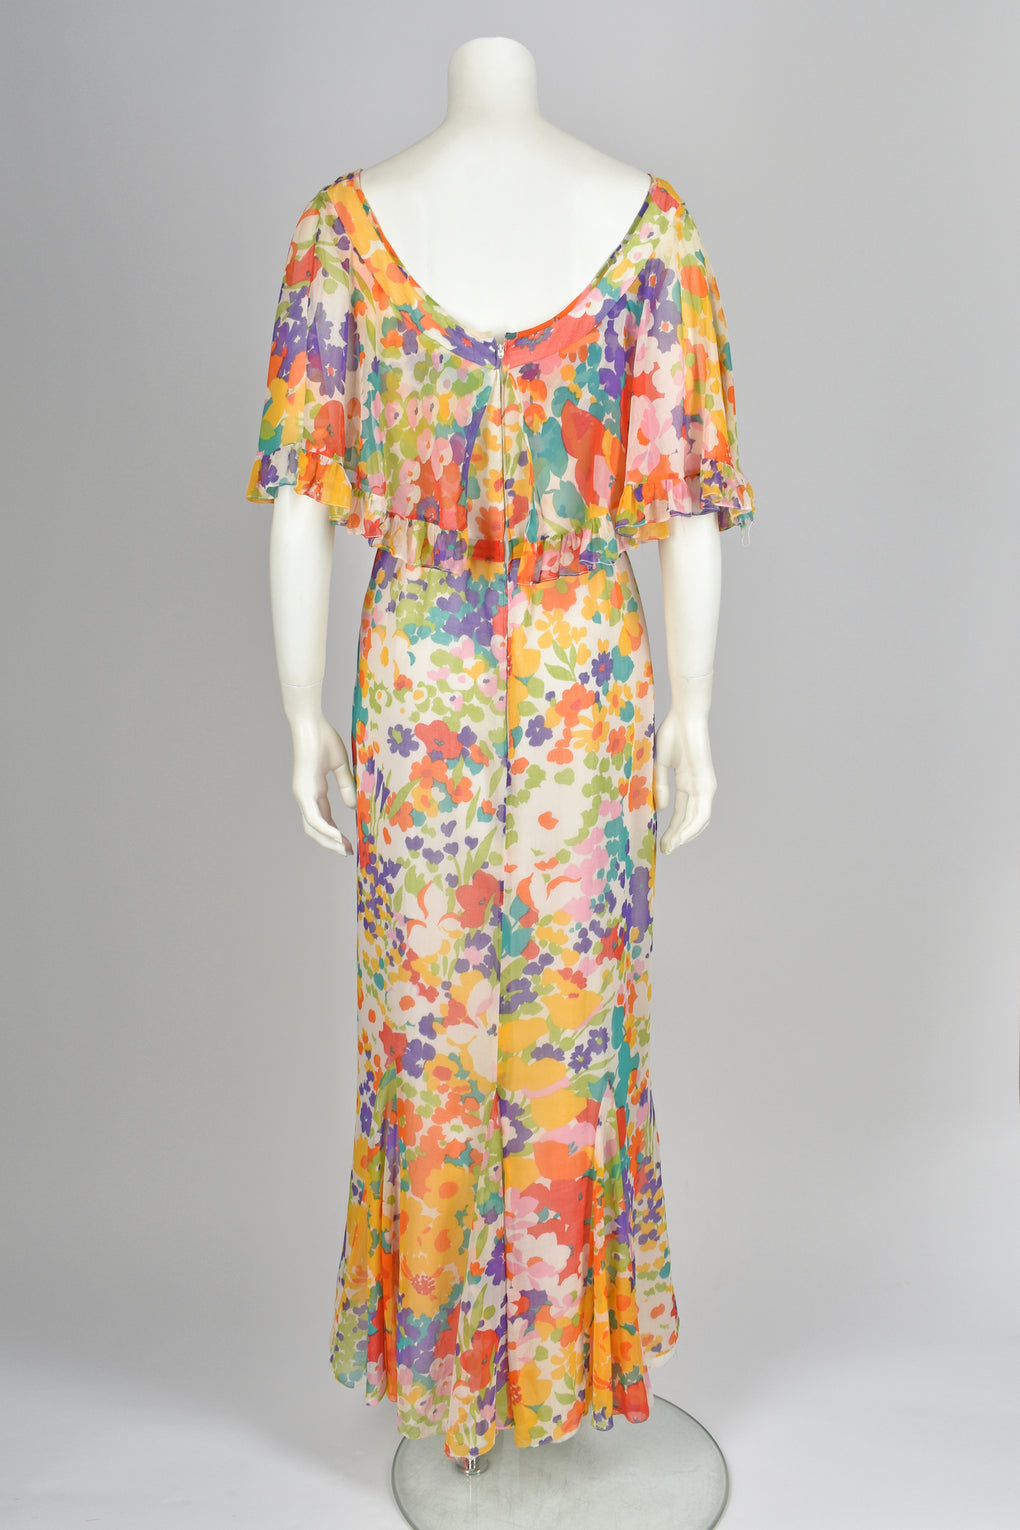 ROBERT DORLAND 70s floral dress / M-L